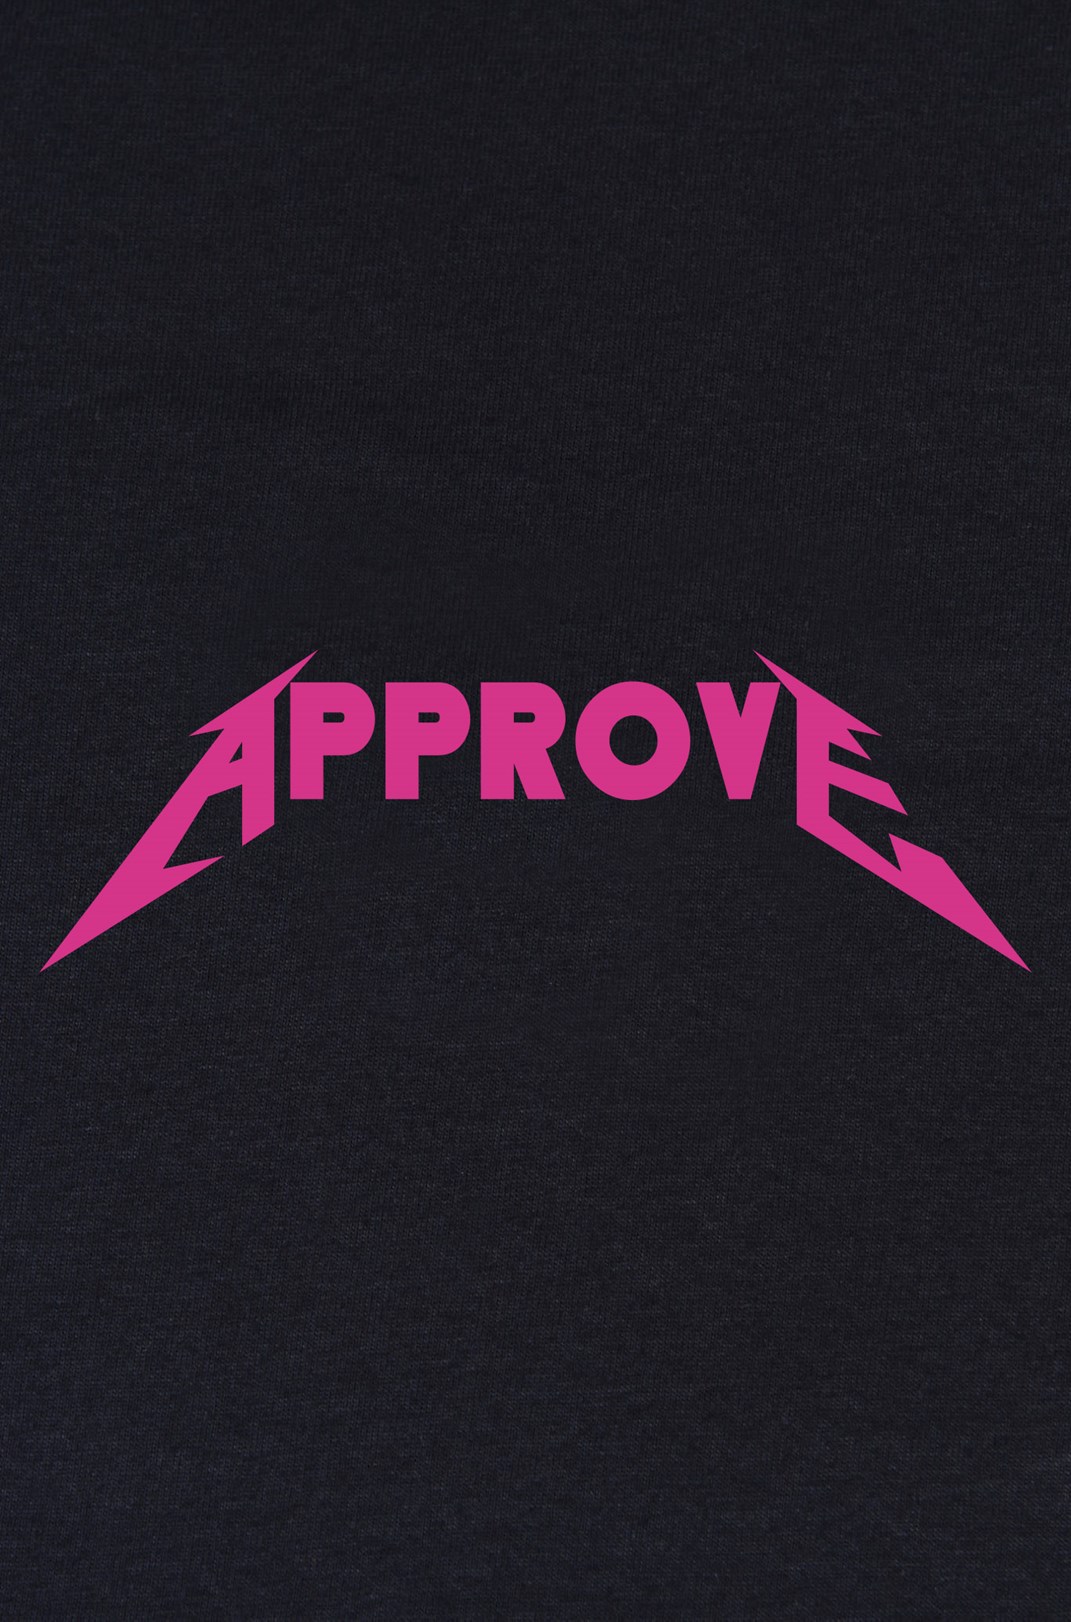 Camiseta Bold Approve Rockstar Preta e Rosa